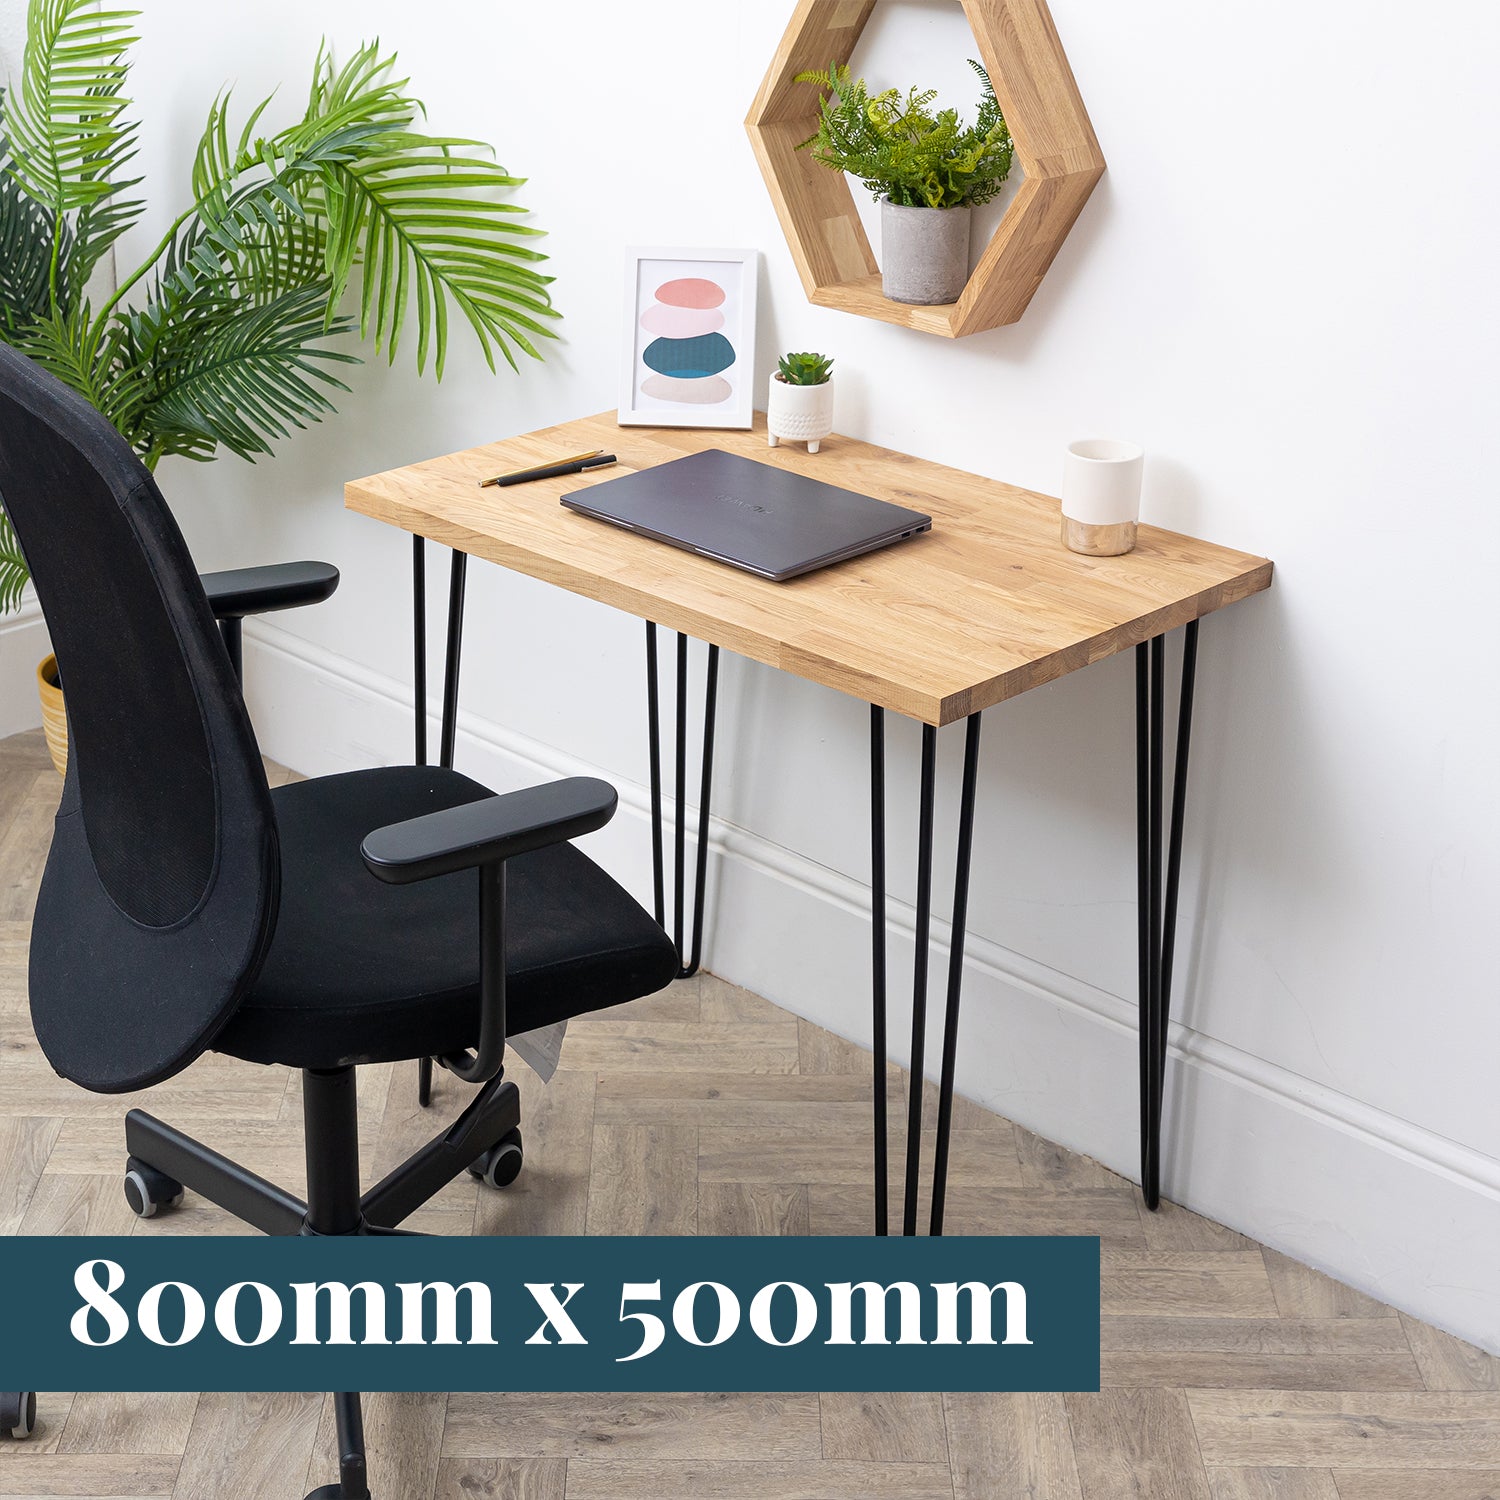 Oak Solid Wood Desk with Black Hairpin Legs - 27mm thick desktop #length_800mm depth_500mm